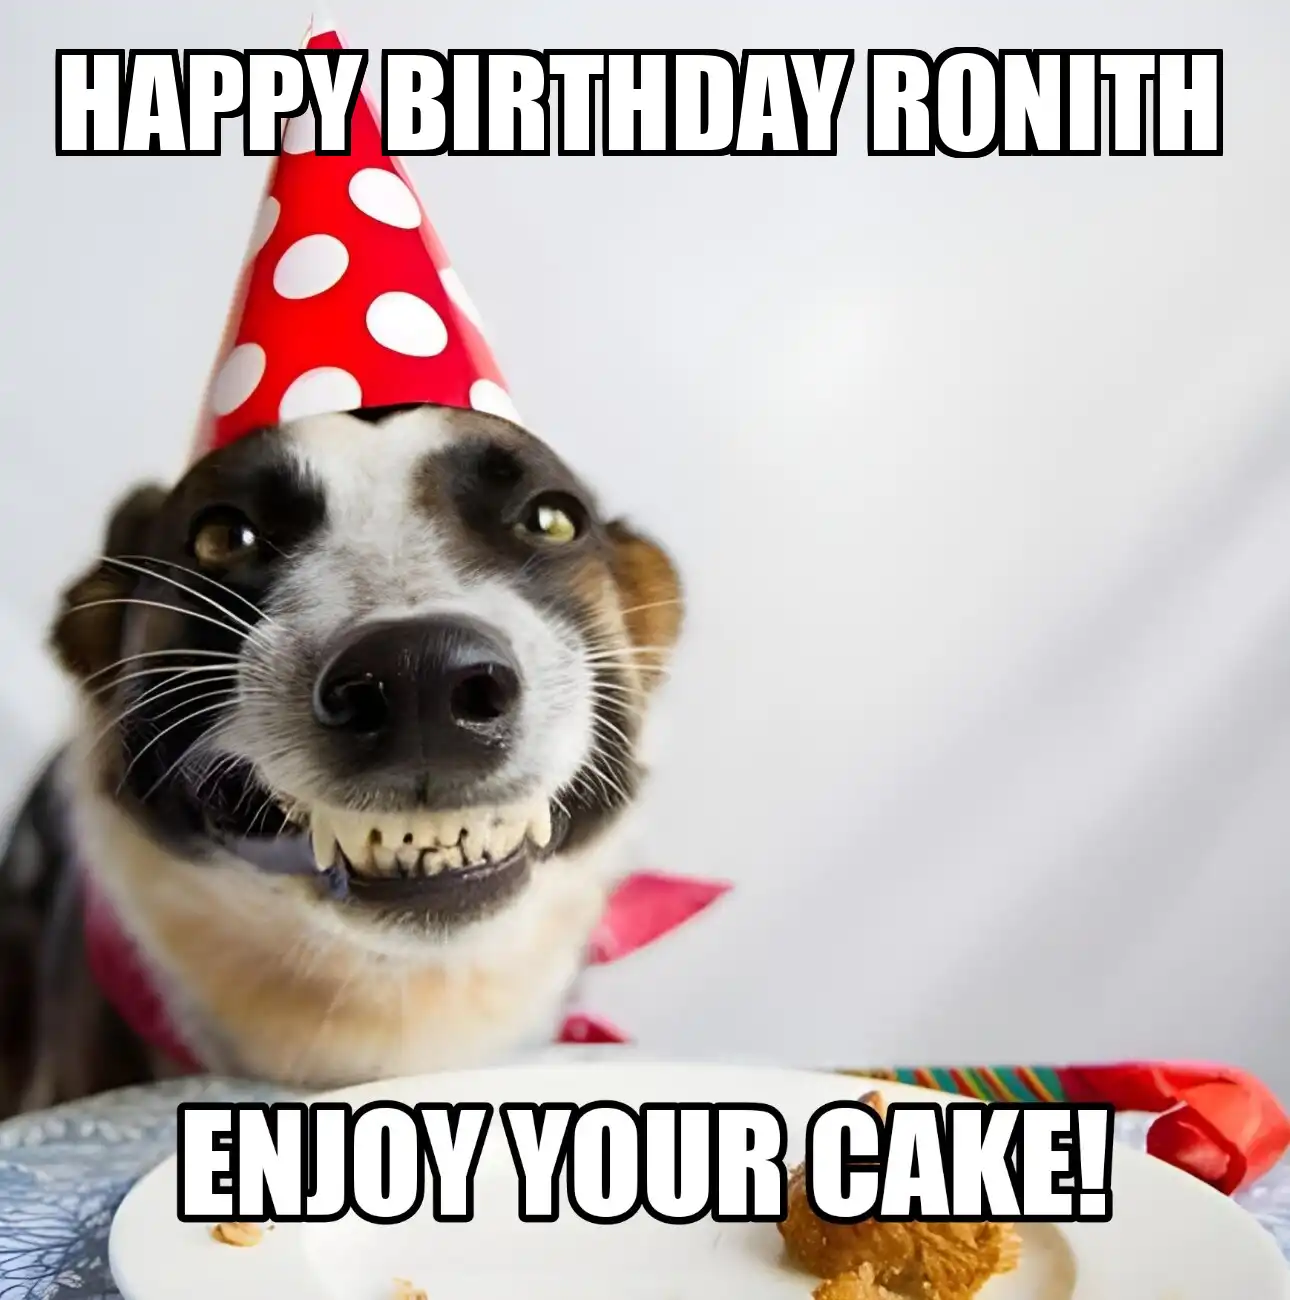 Happy Birthday Ronith Enjoy Your Cake Dog Meme